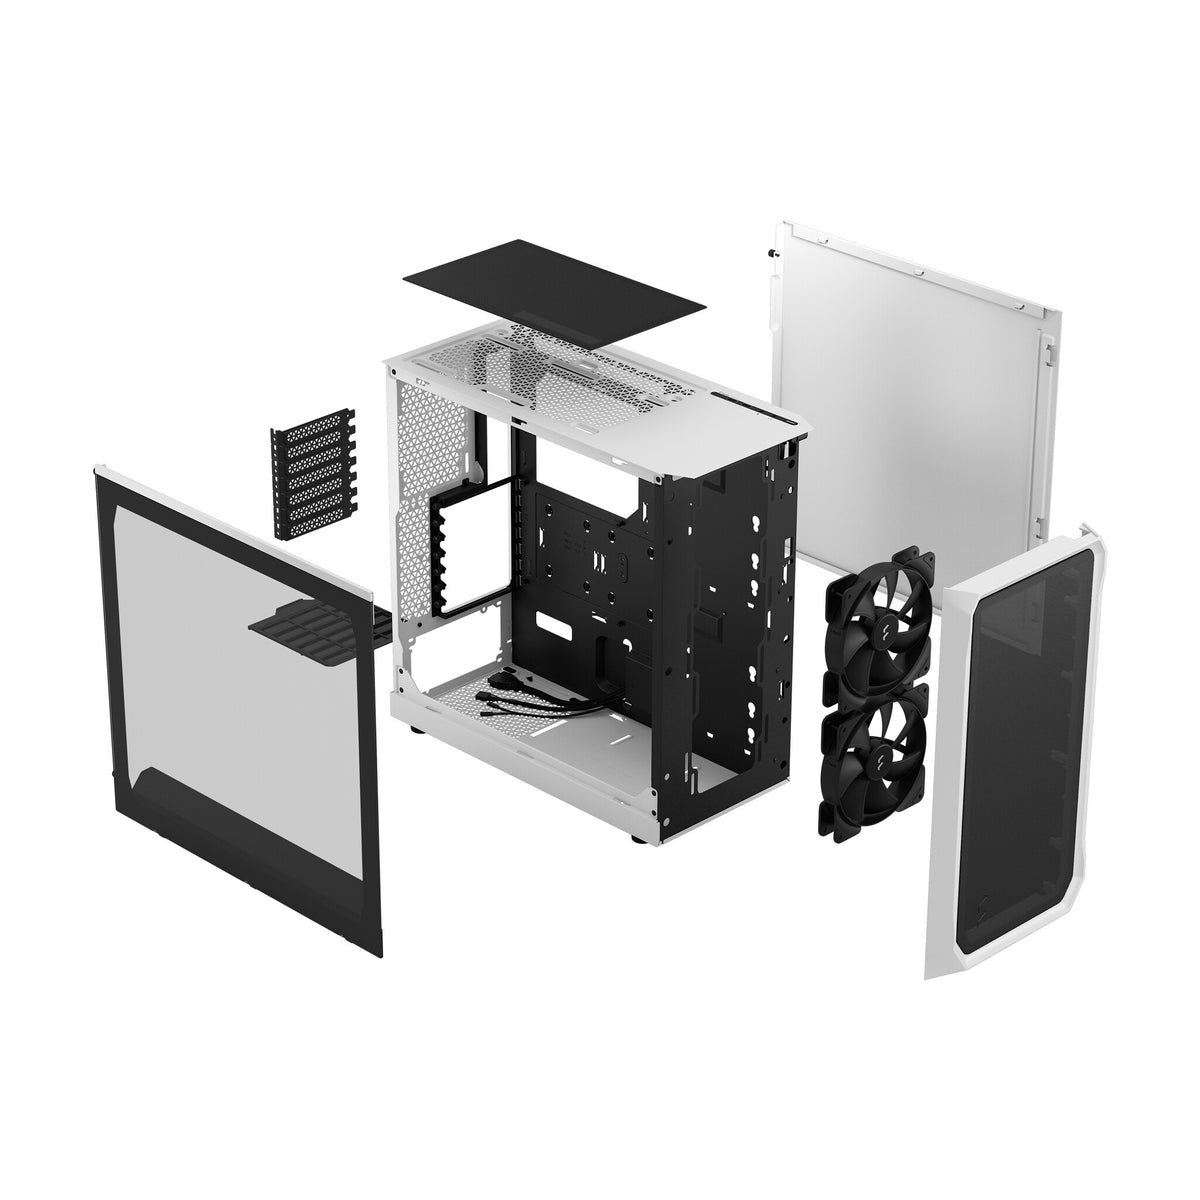 Fractal Design Focus 2 - ATX Mid Tower Case in White